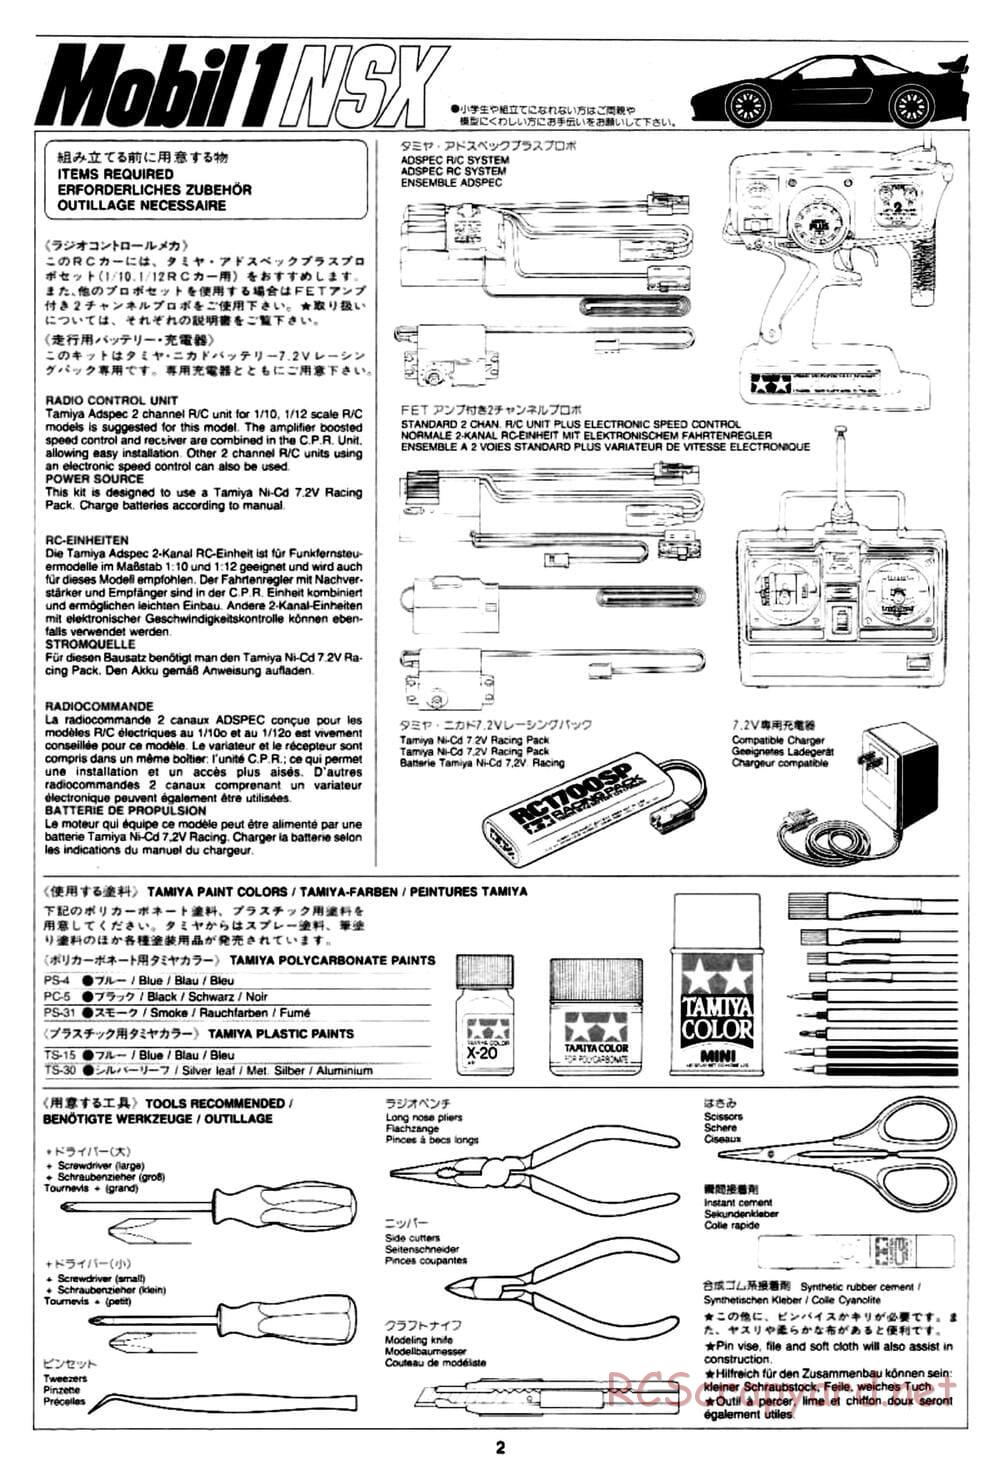 Tamiya - Mobil 1 NSX - TA-03R Chassis - Manual - Page 2